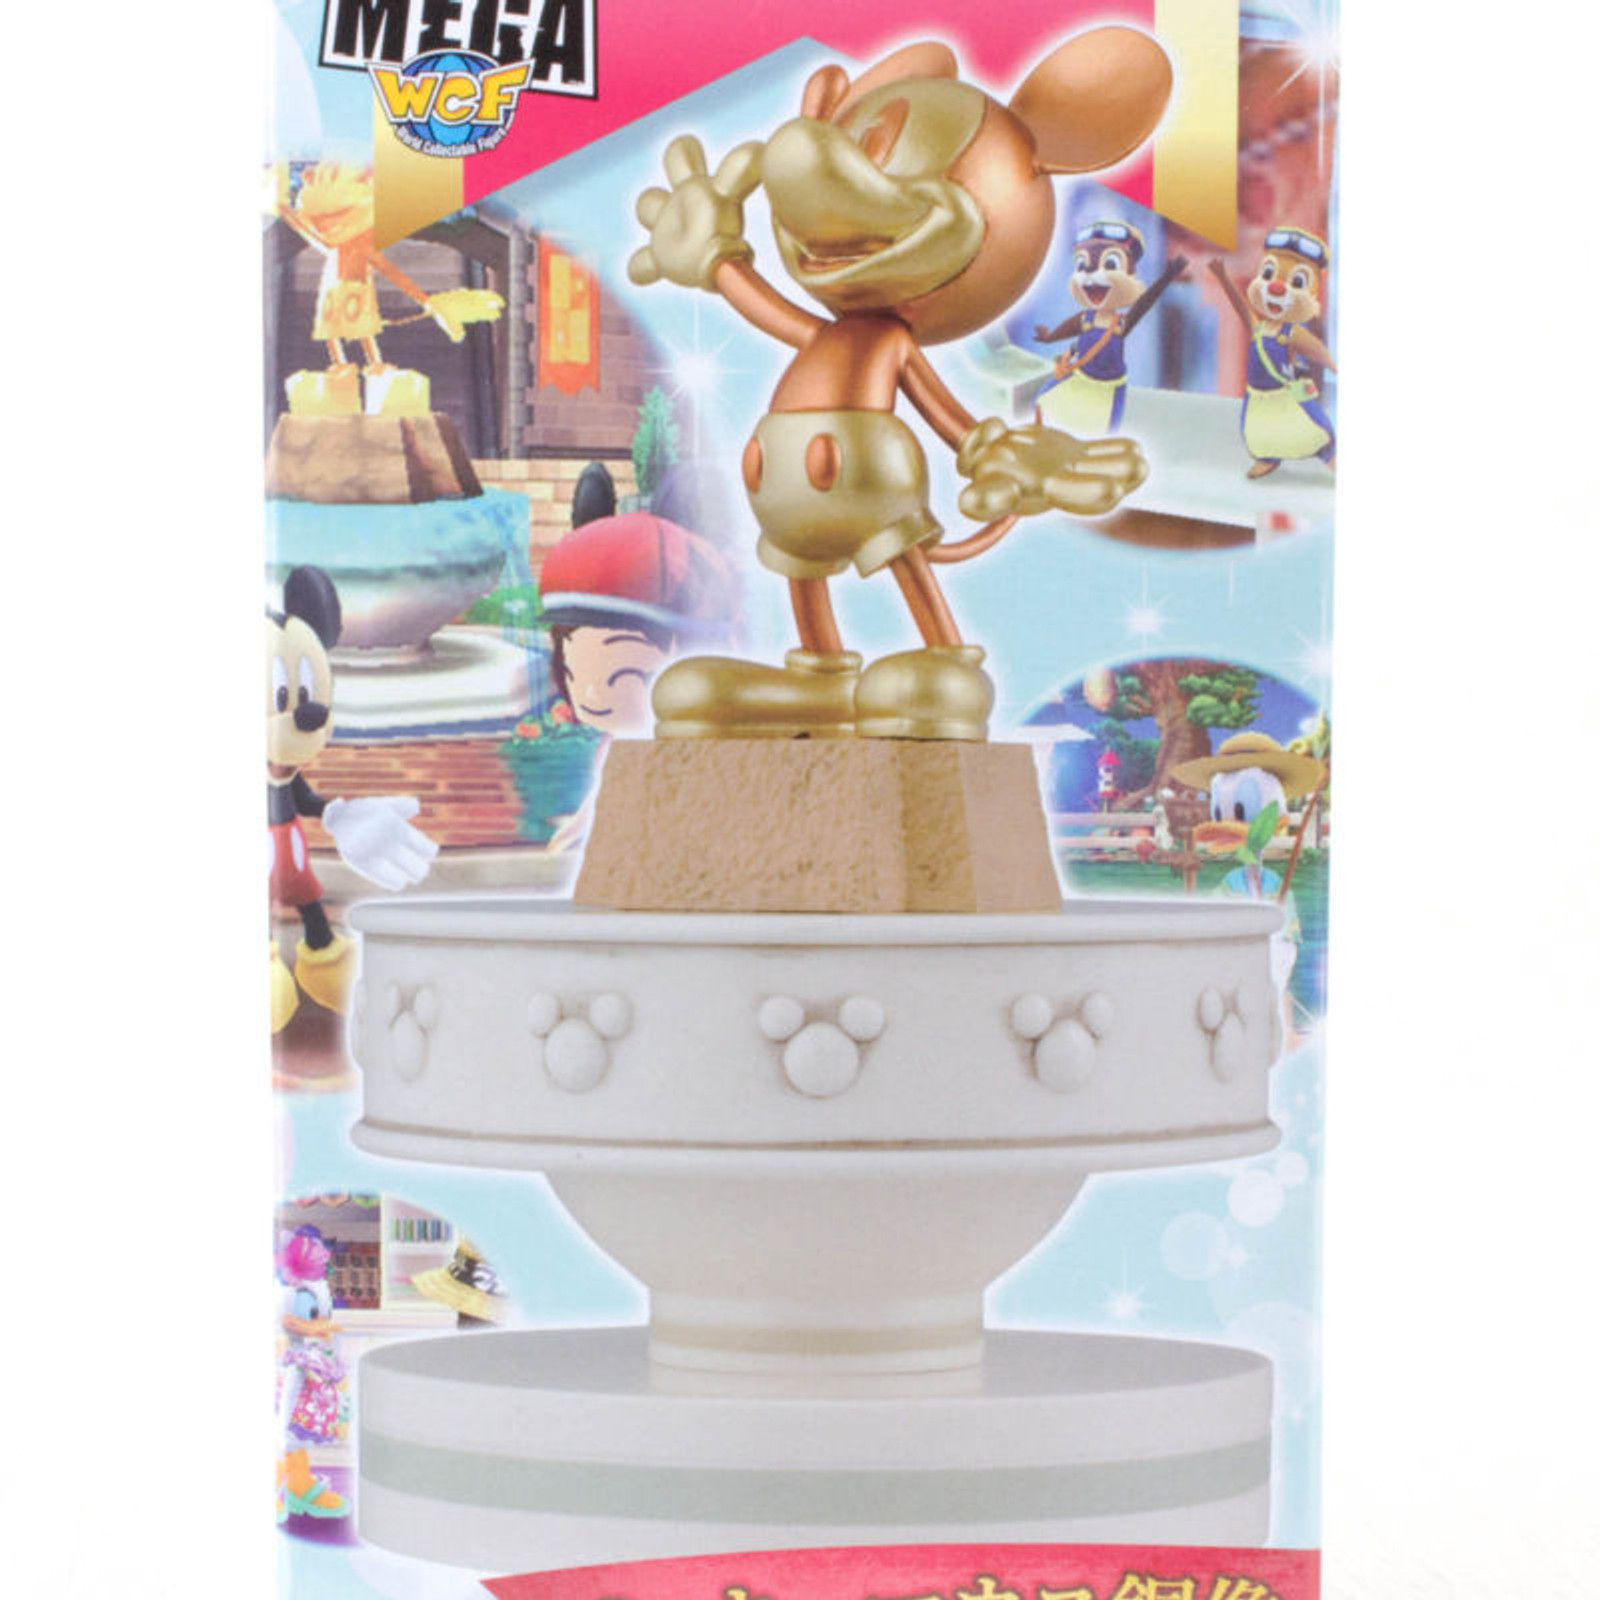 Disney Mickey Mouse Statue Figure Magic Castle Mega WCF Banpresto JAPAN